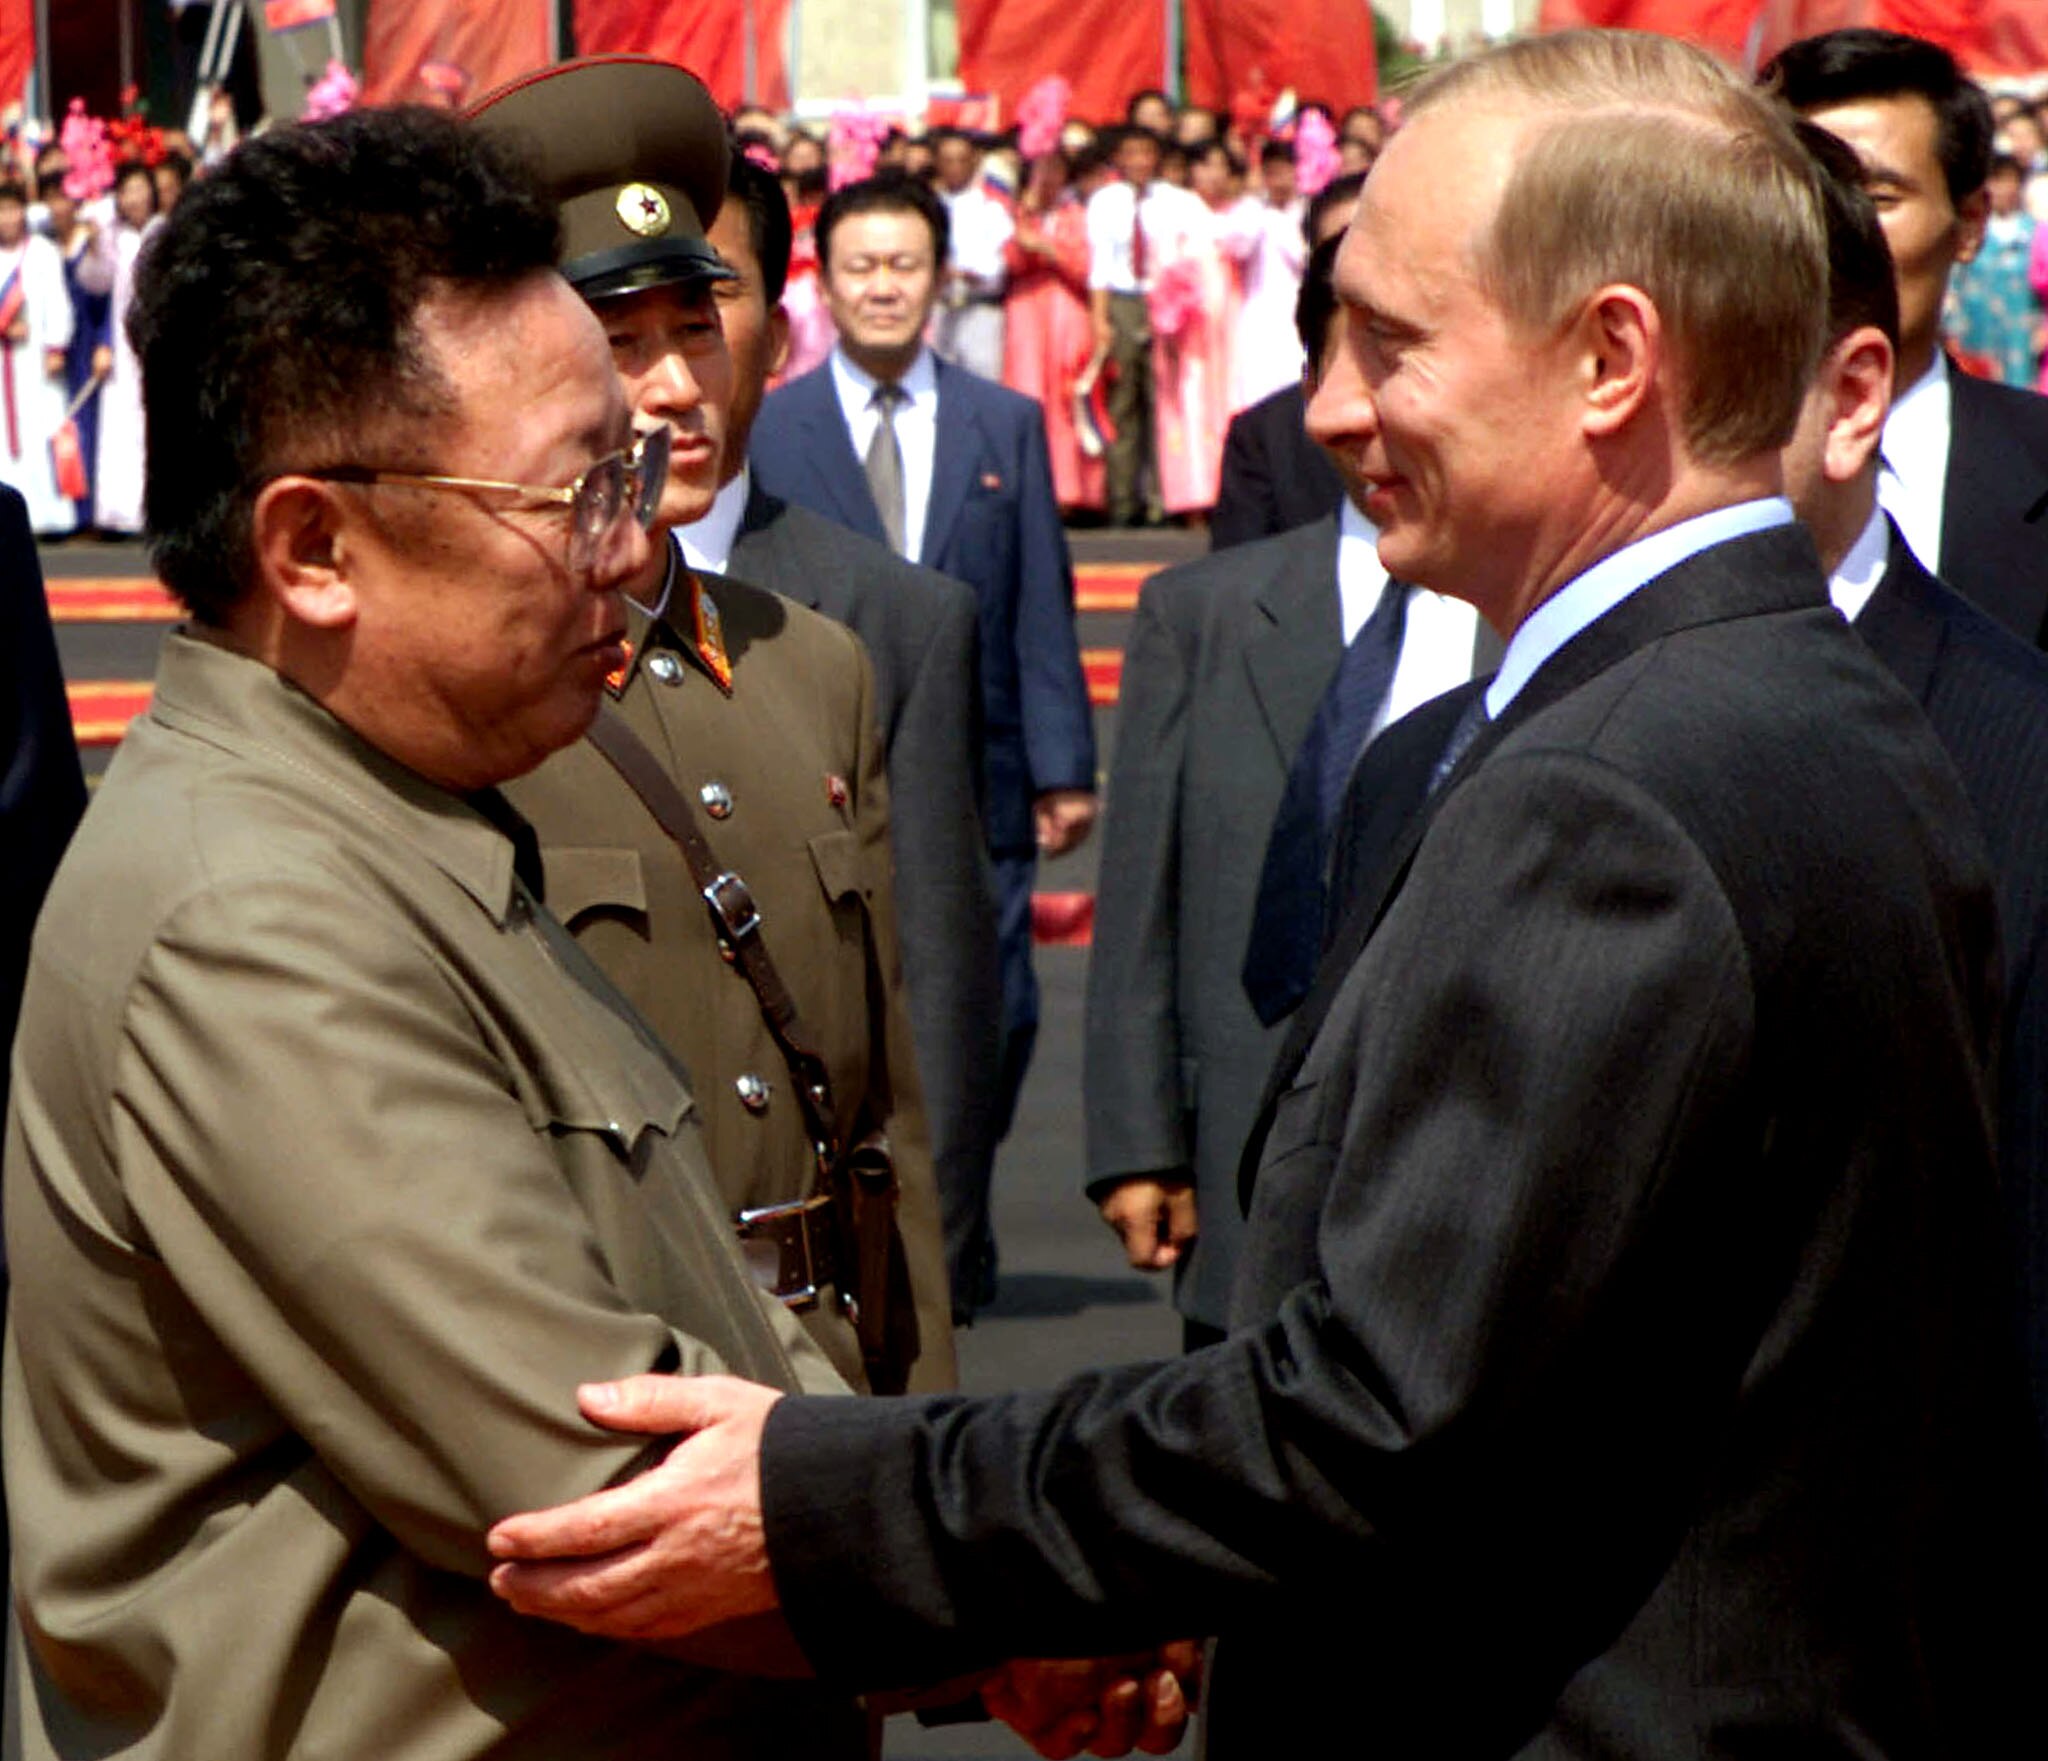  Kim Jong-il stands opposite Vladimir Putin while the pair shake hands.